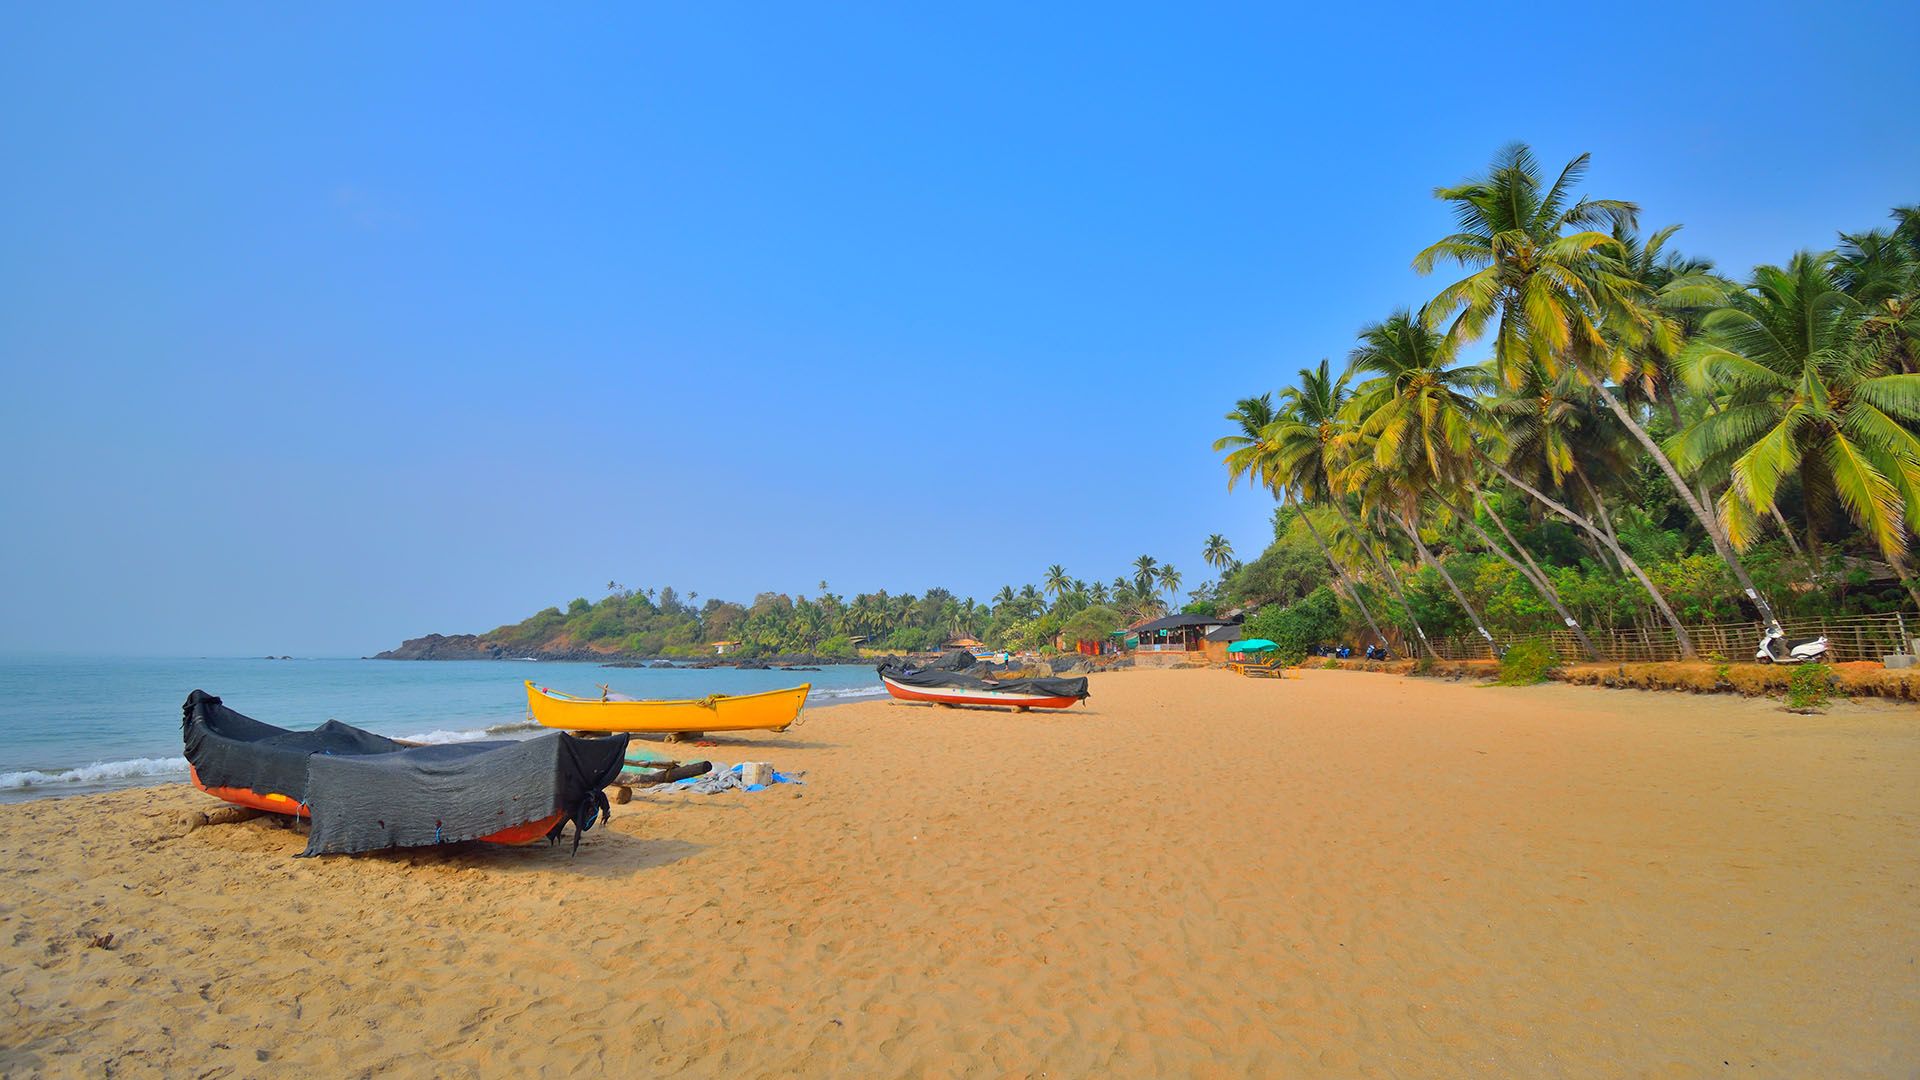 Fishing boats kept in Patnem beach in Goa, India © Saurav022/Shutterstock